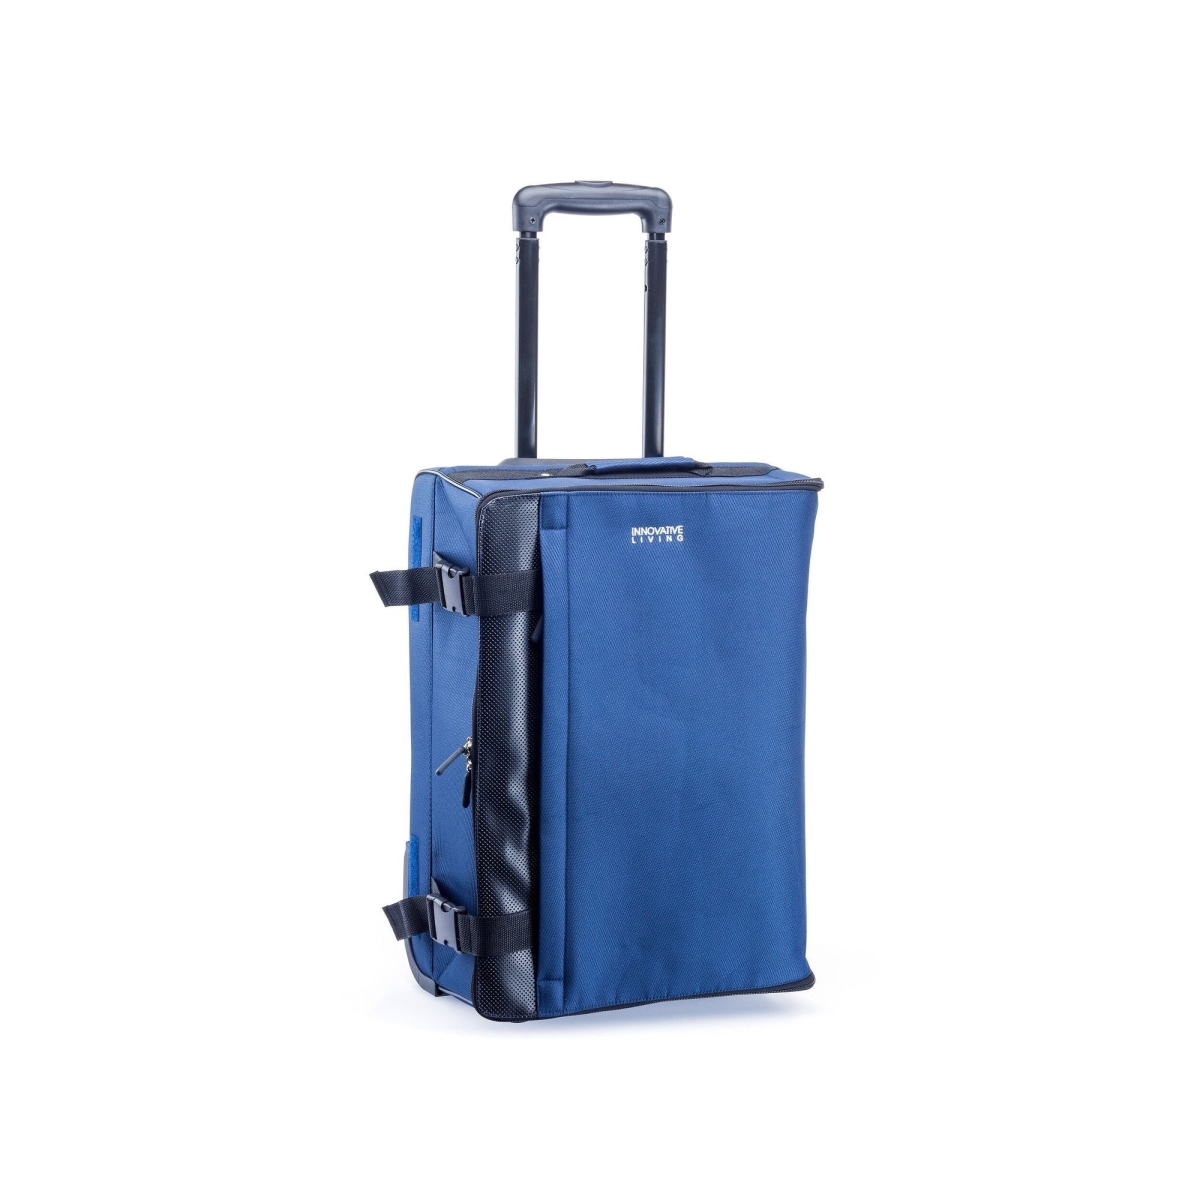 Ii-217 Collapsible Luggage - Blue